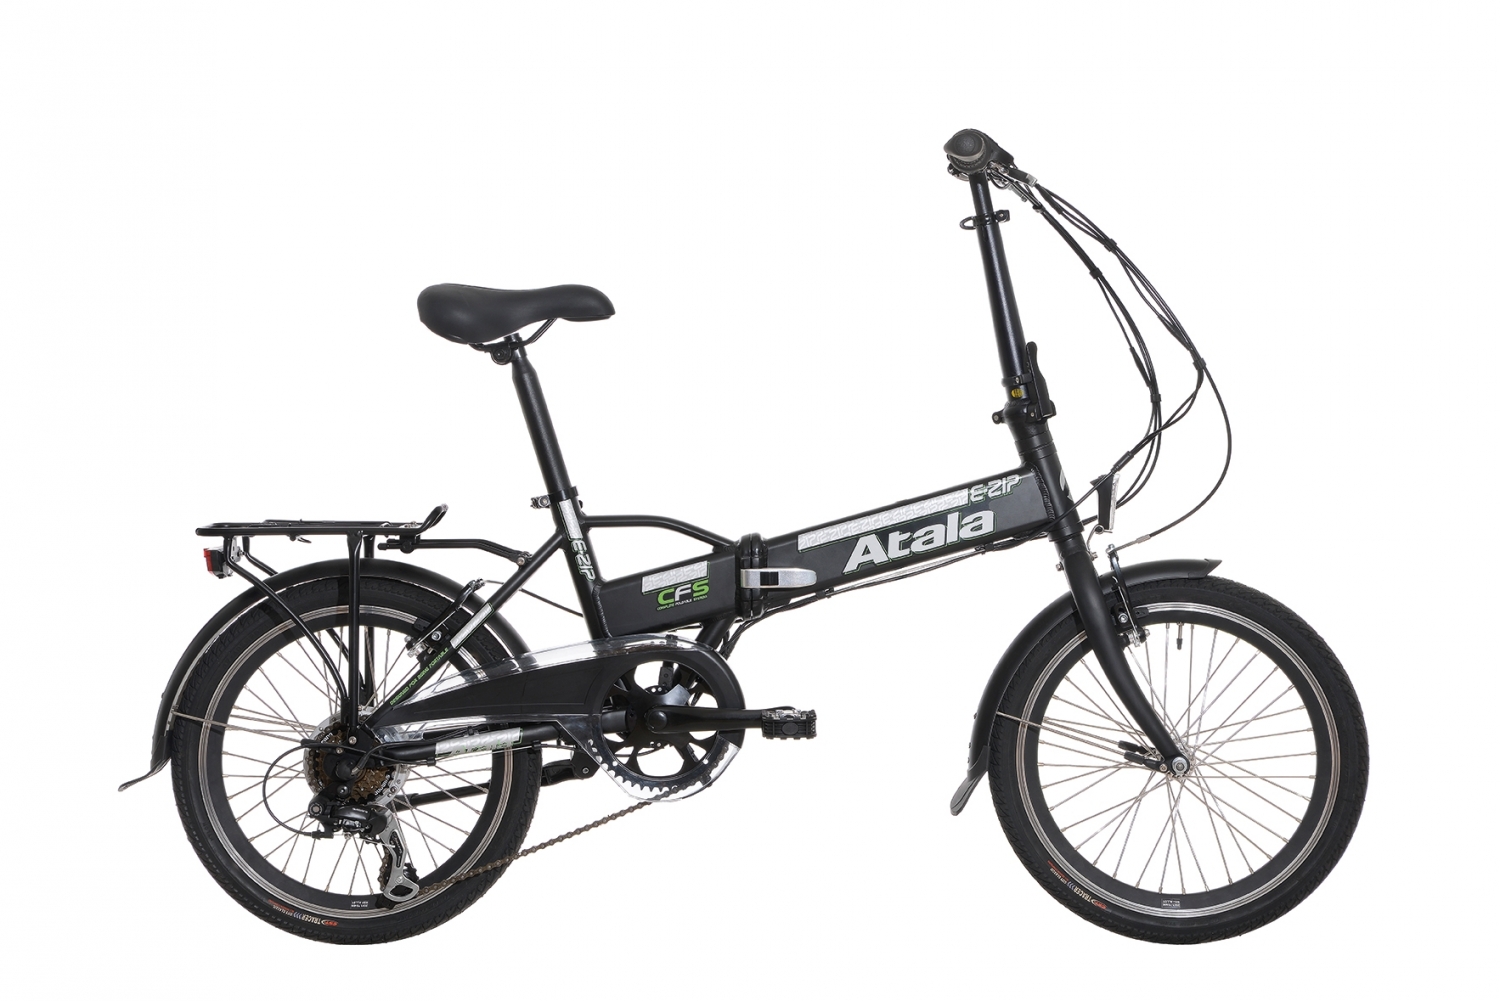 Atala E-Zip Bicicleta Portable, Plegable 6v 36v 6Ah